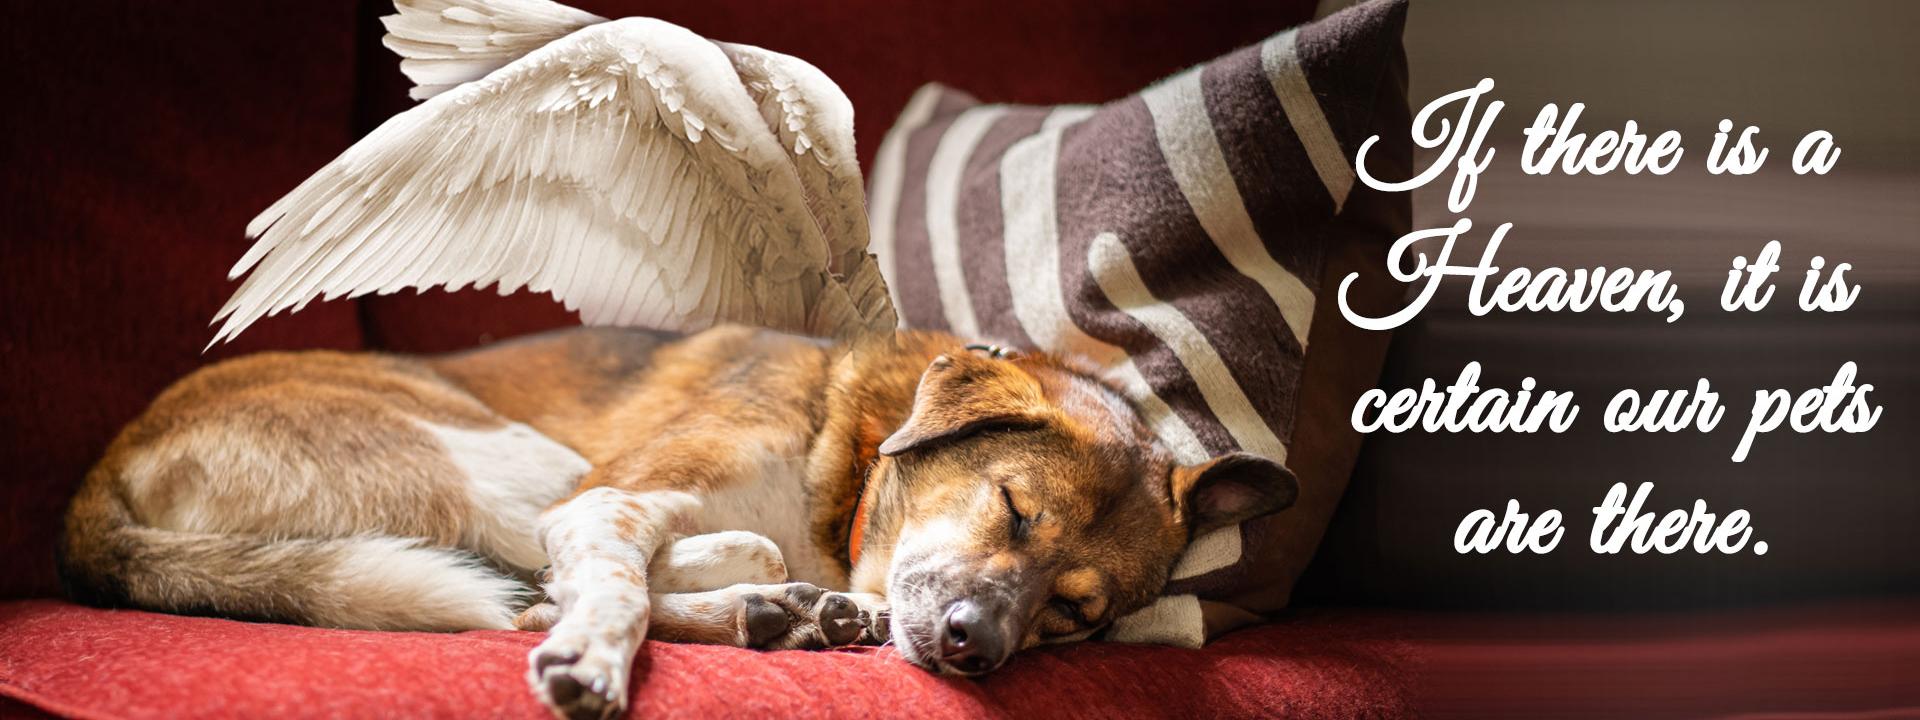 dog with angel wings sleeping on sofa